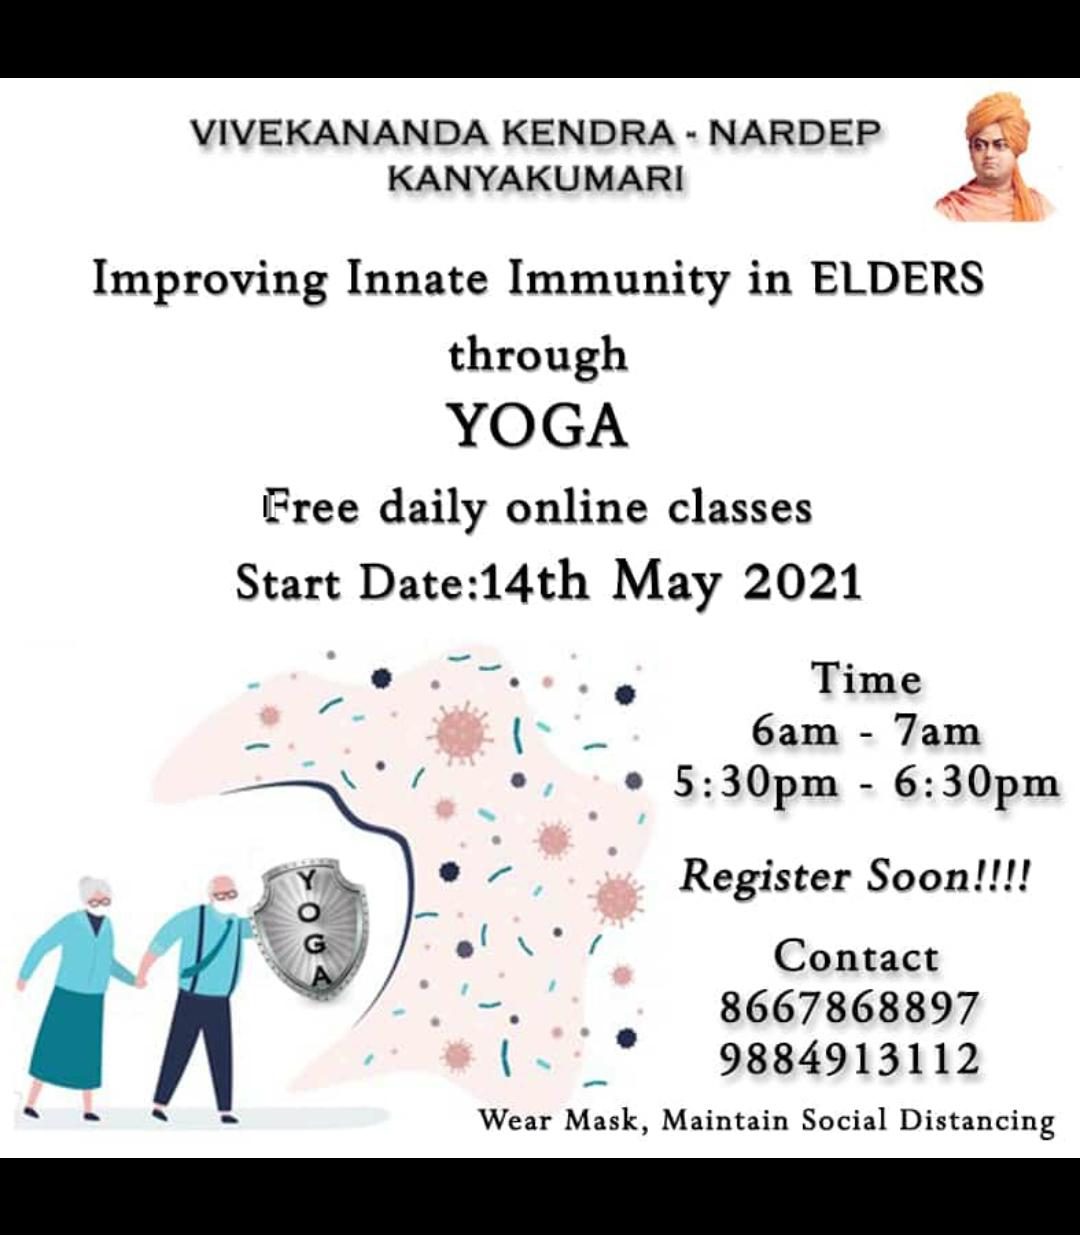 Improving Innate Immunity in Elders Through Yoga - NARDEP